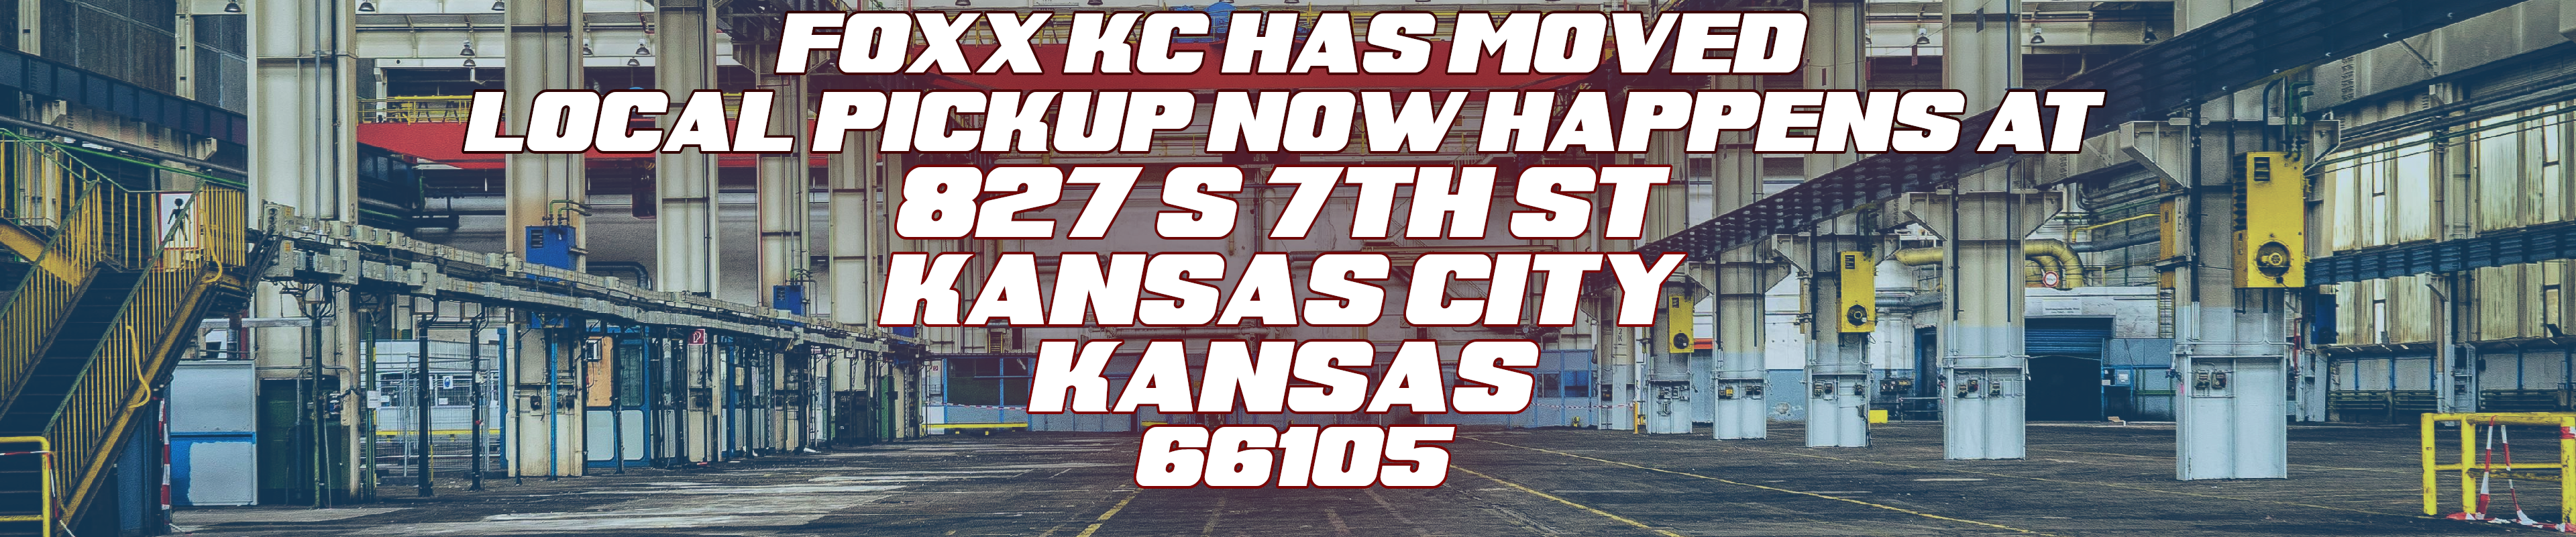 New pickup address is 827 S 7th St, KCK